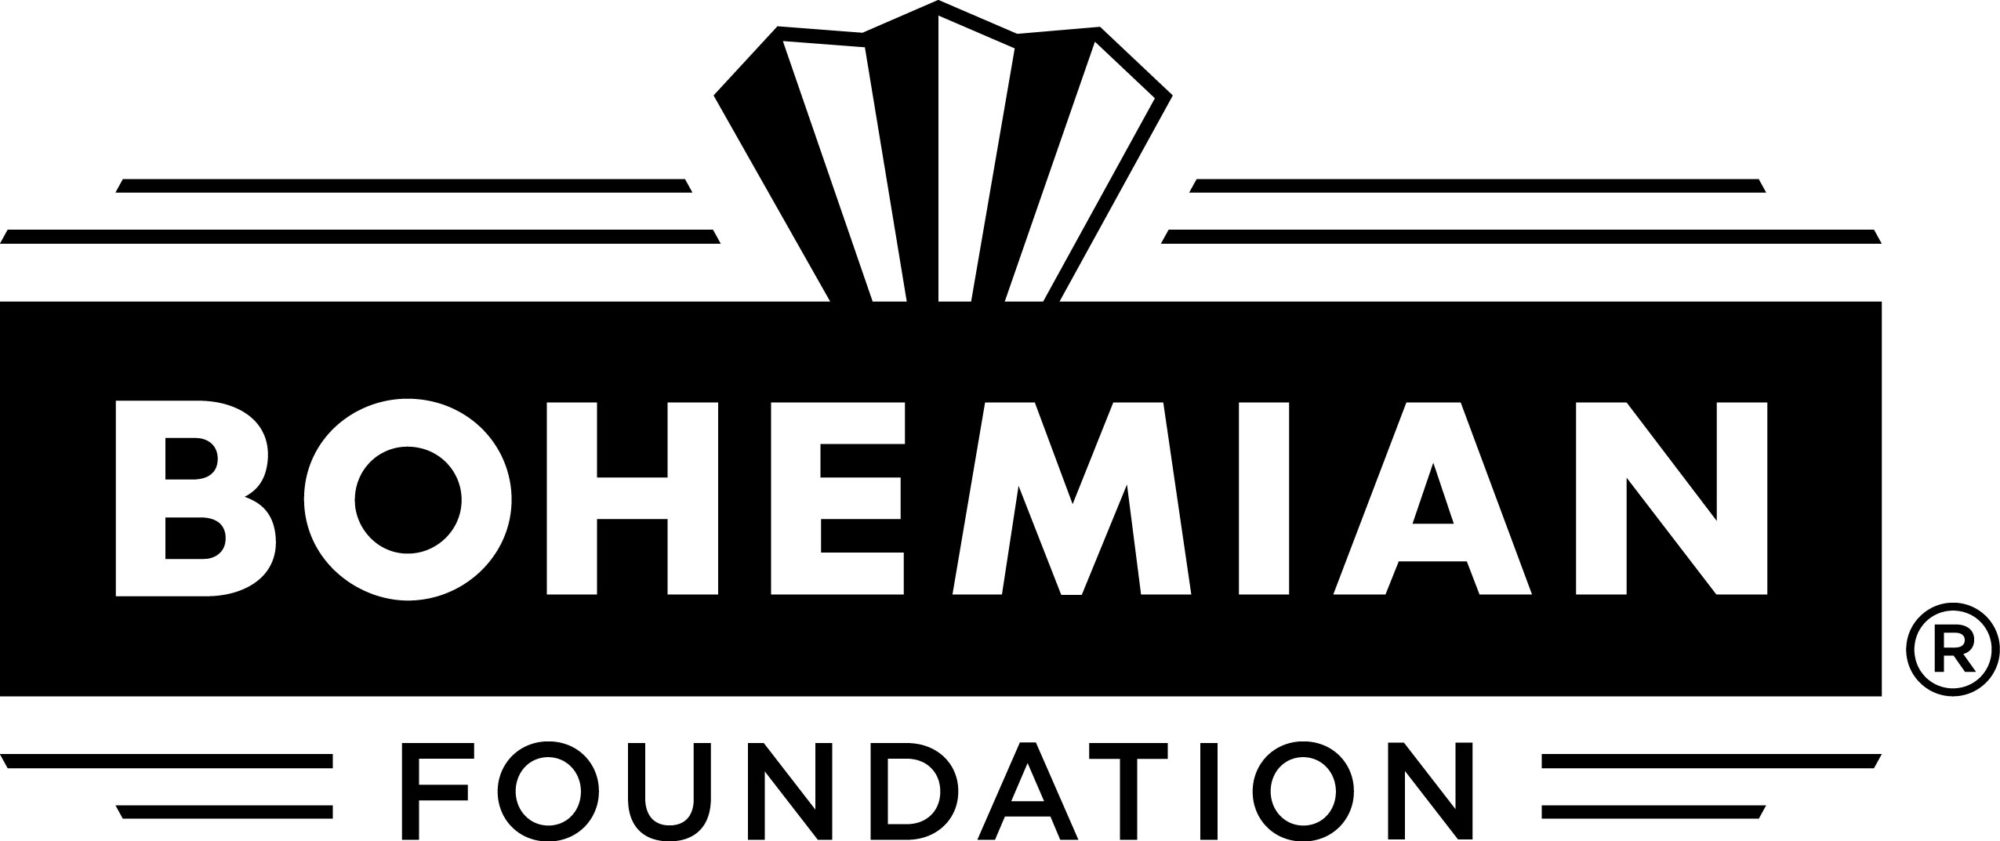 Bohemian Foundation